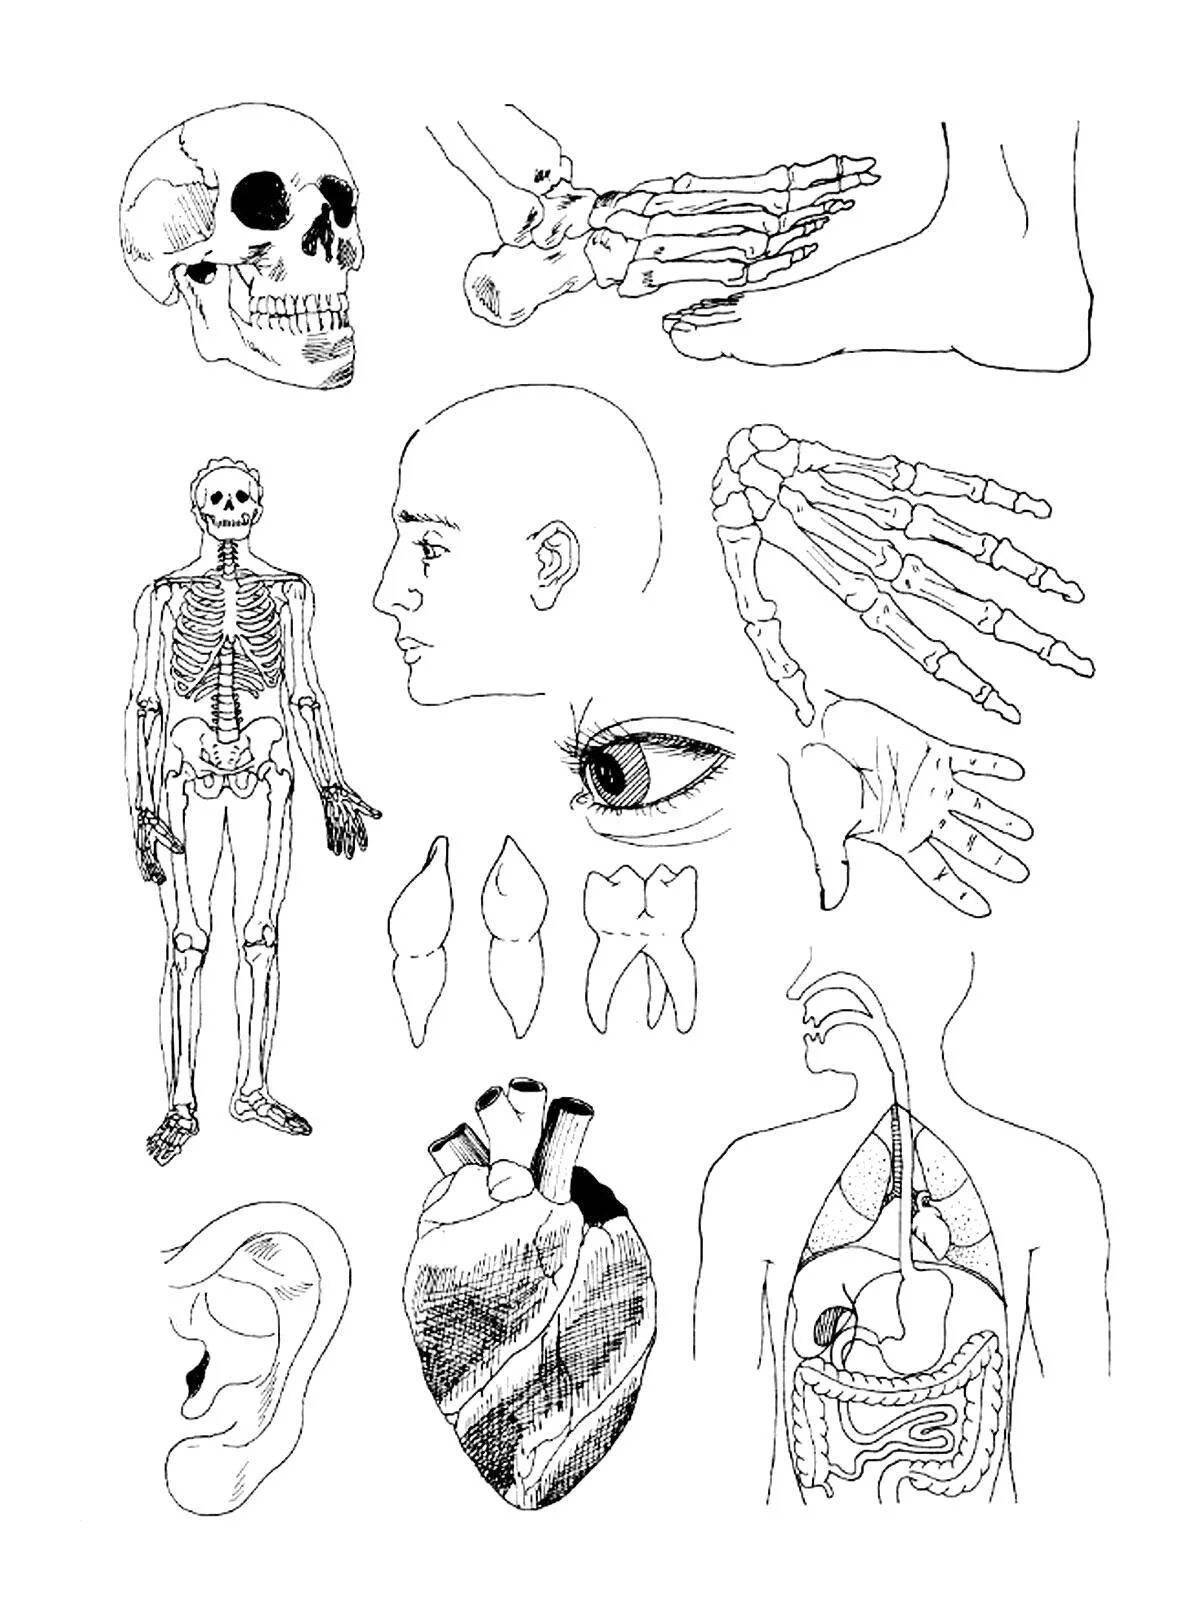 Anatomy #5